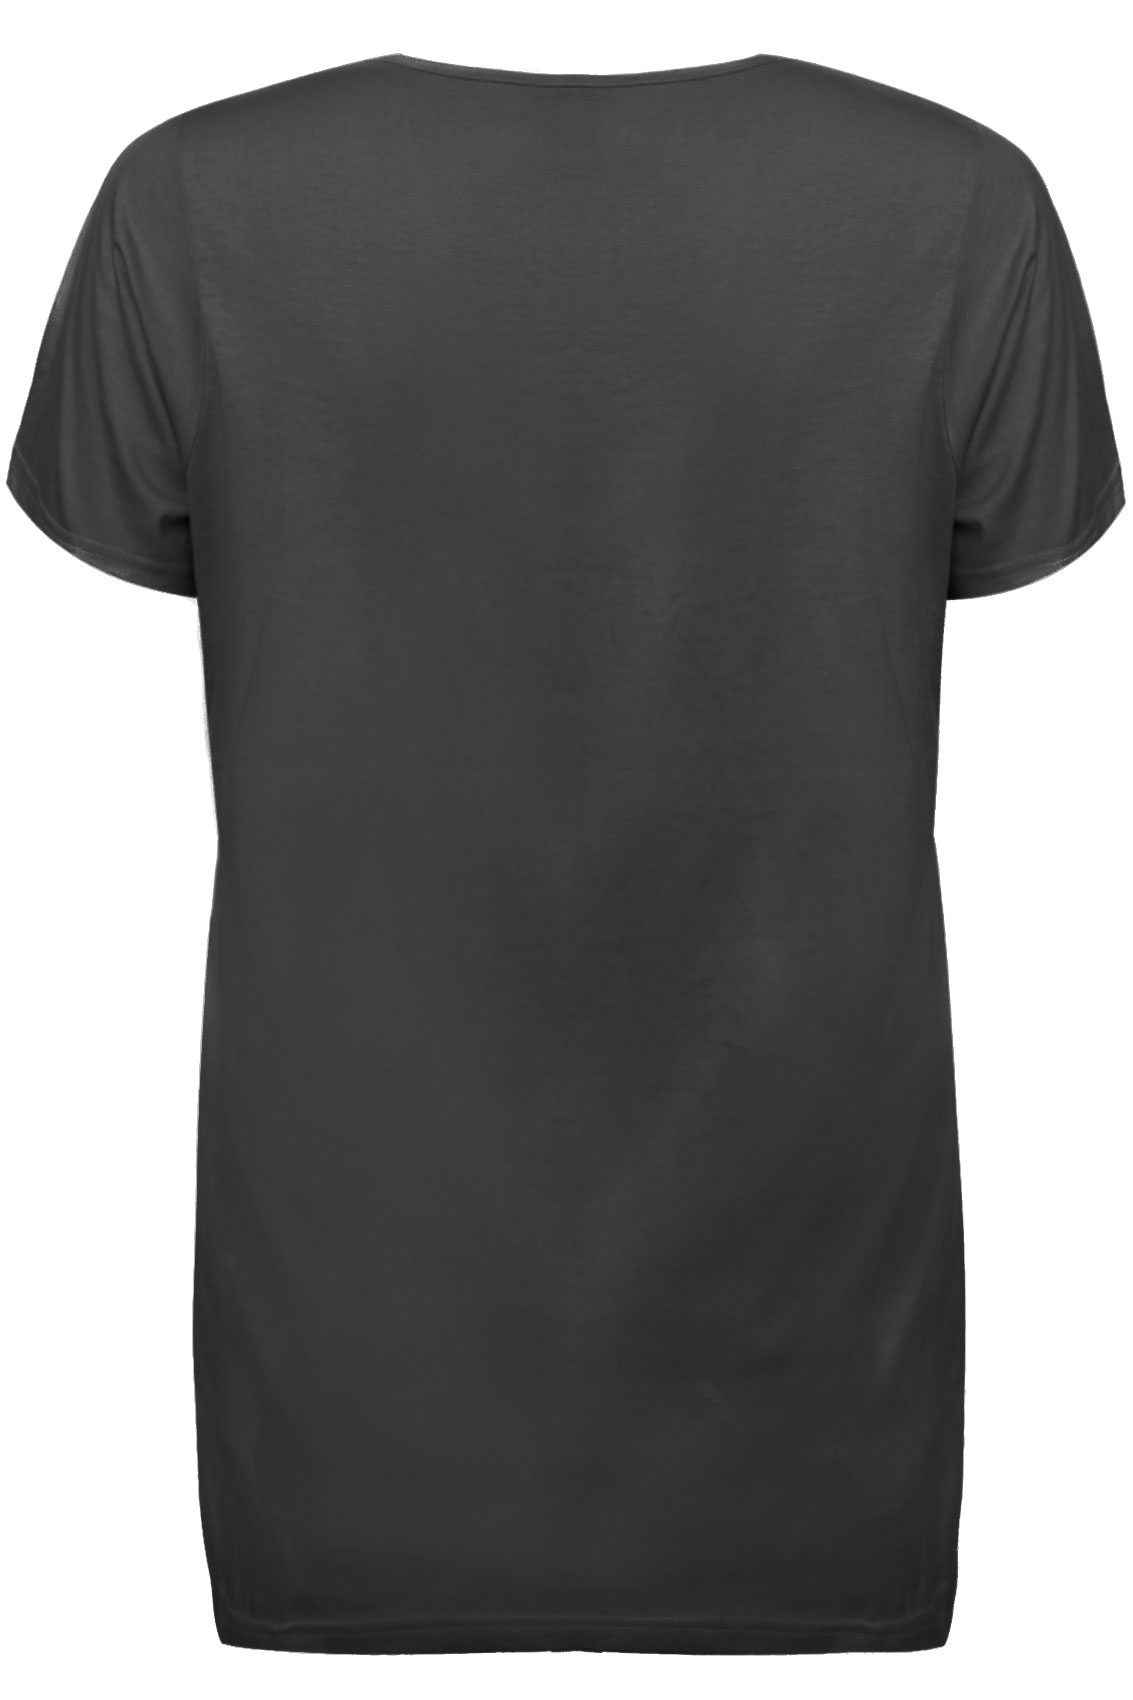 Black Plain Basic Short Sleeved V Neck T Shirt Plus Size 16 To 32